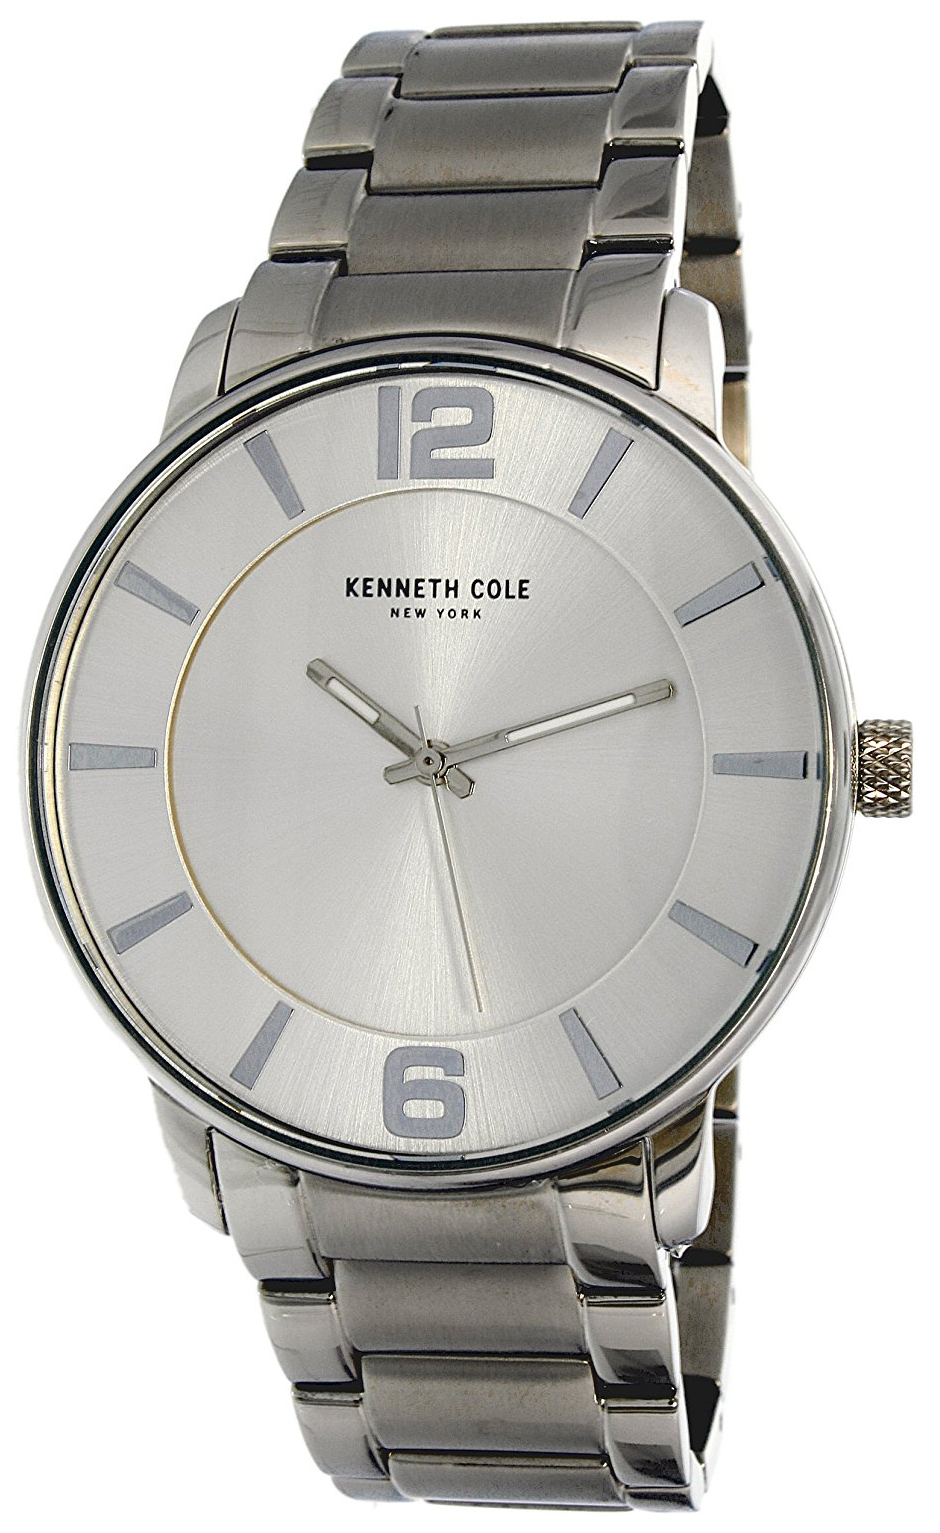 Kenneth Cole Classic Herrklocka 10031716 Silverfärgad/Stål Ø42 mm - Kenneth Cole